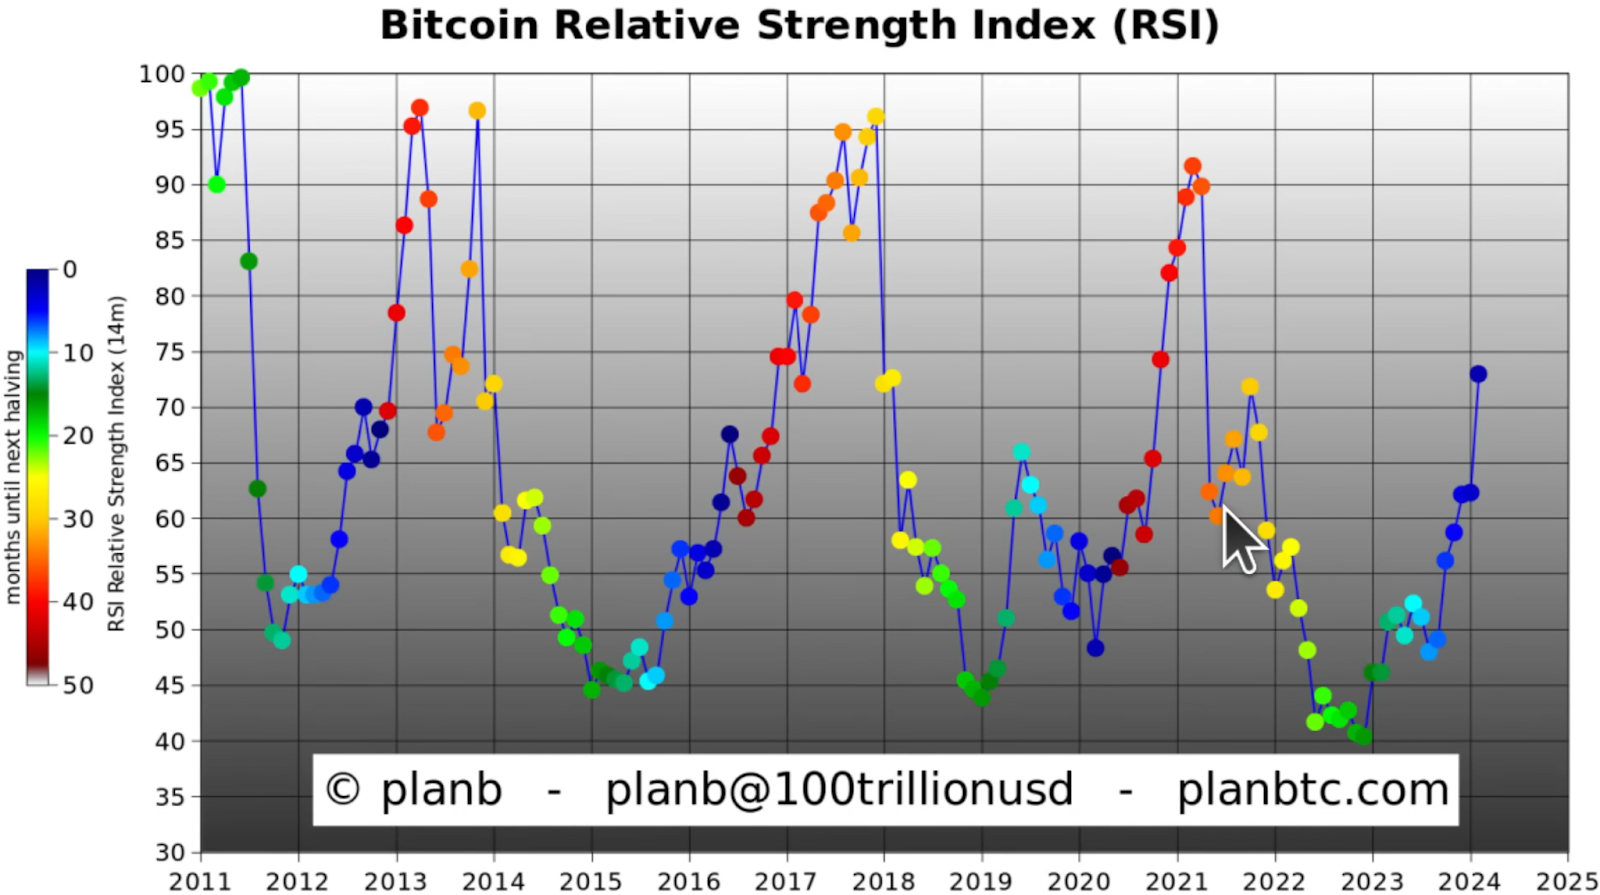 Relative Strength Index (RSI) Chart via Plan B on Youtube

